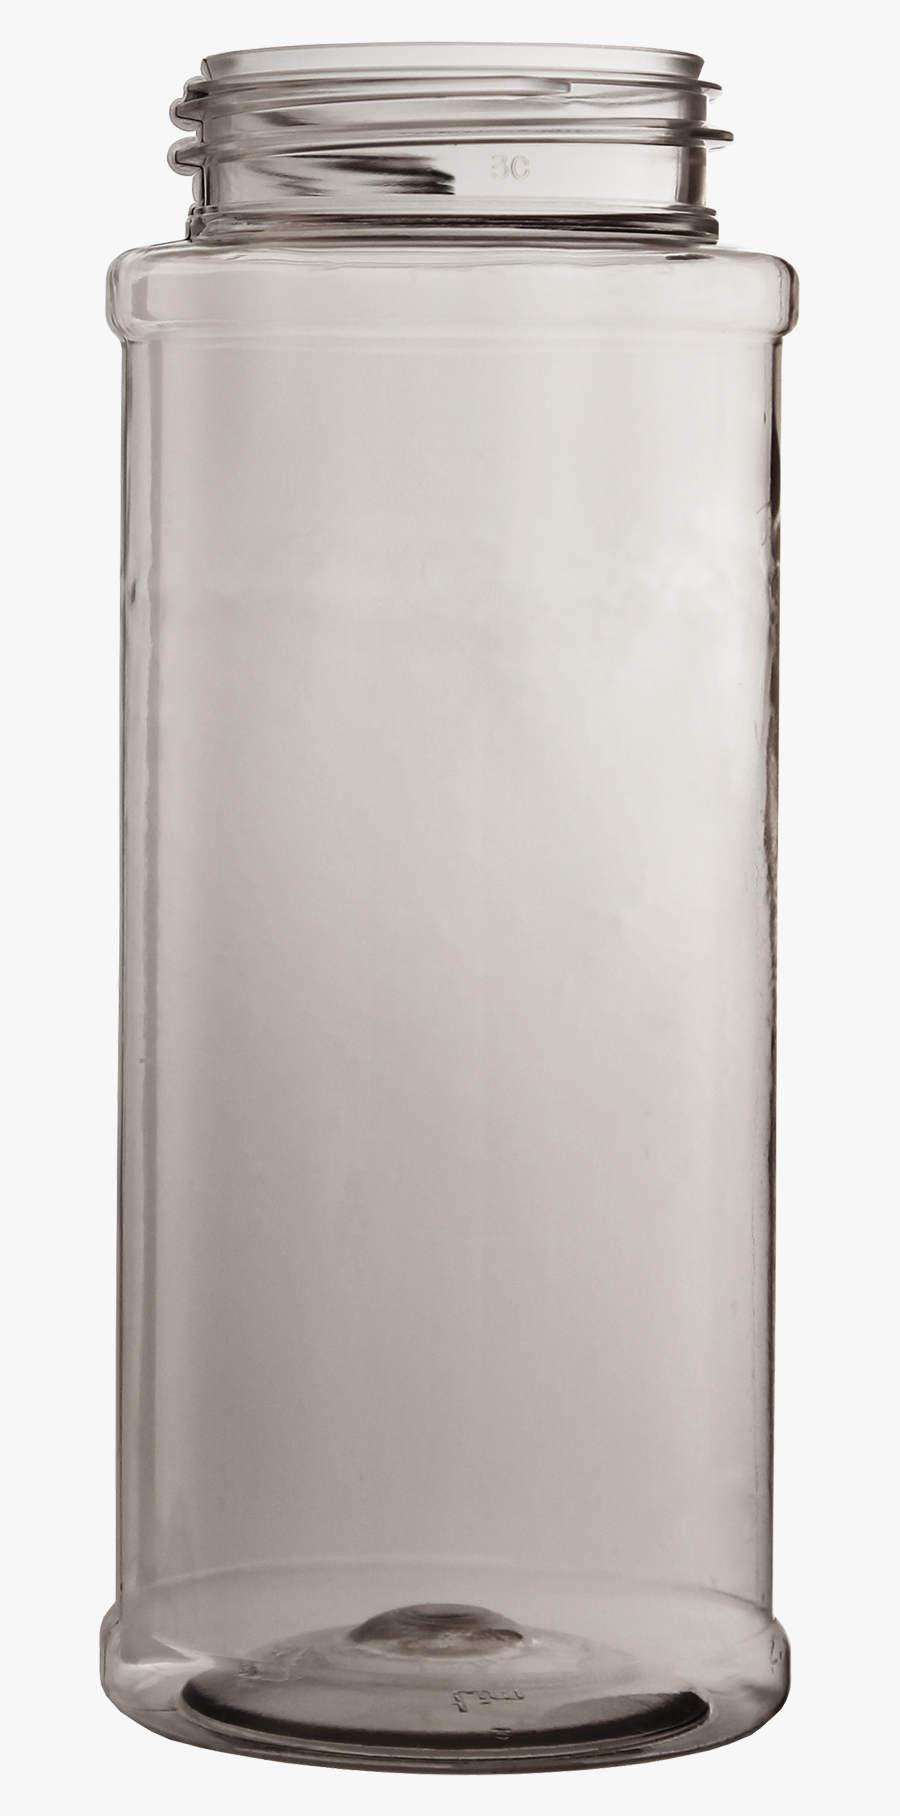 Spice Jar Png - Water Bottle, Transparent Clipart